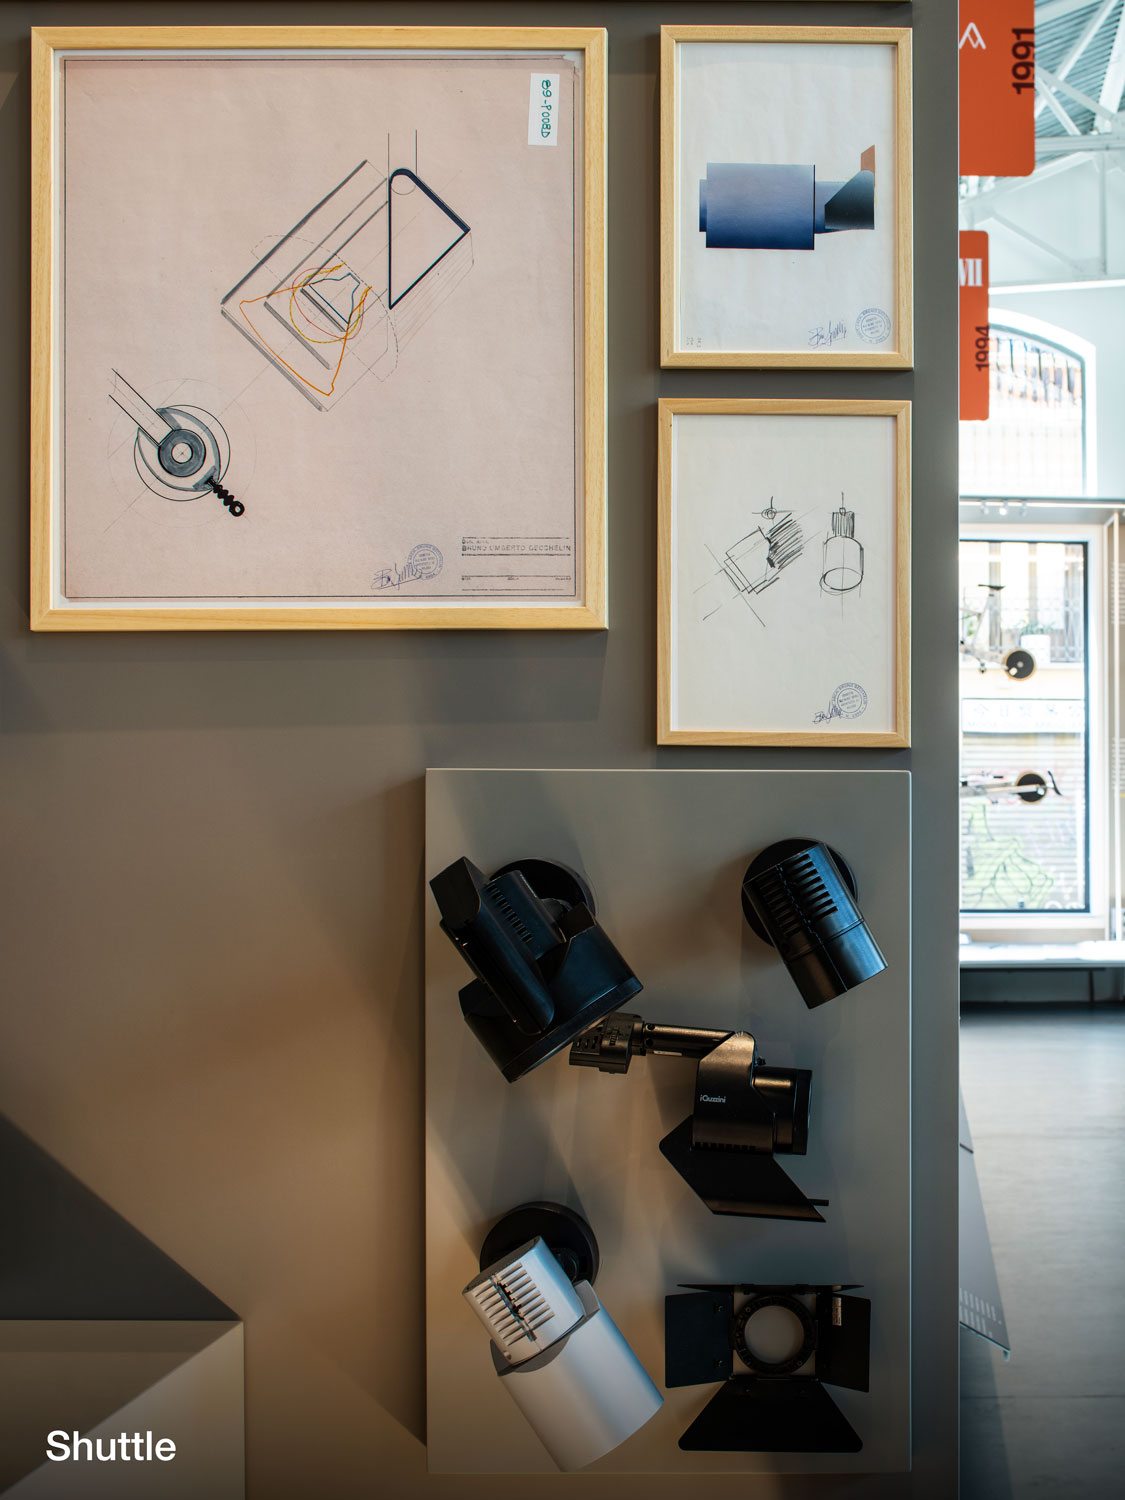 The iGuzzini Compasso d’Oro winners on display at the ADI Design Museum